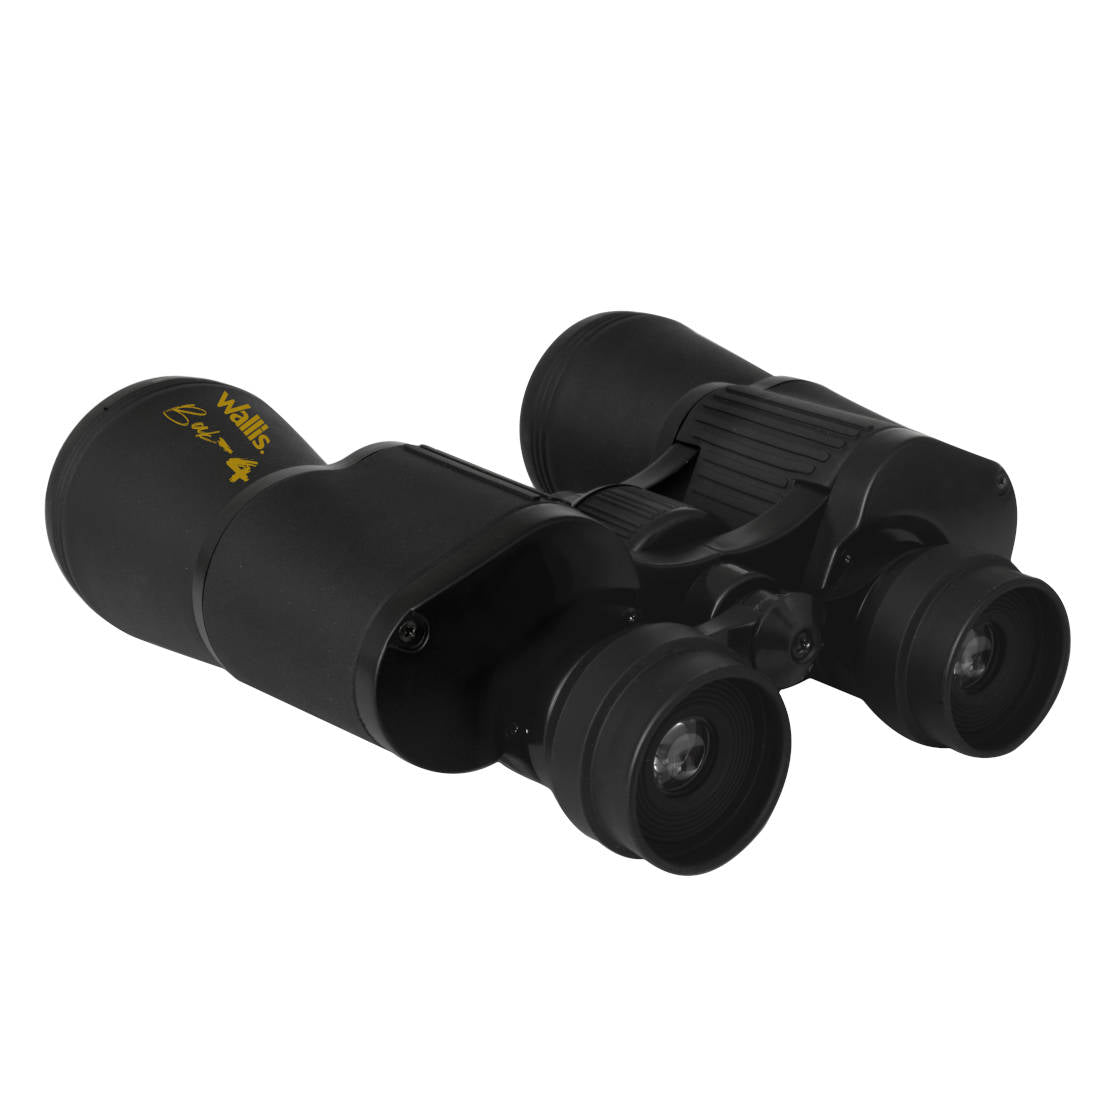 Binocular gran angular tipo porro 20 x 50 mm